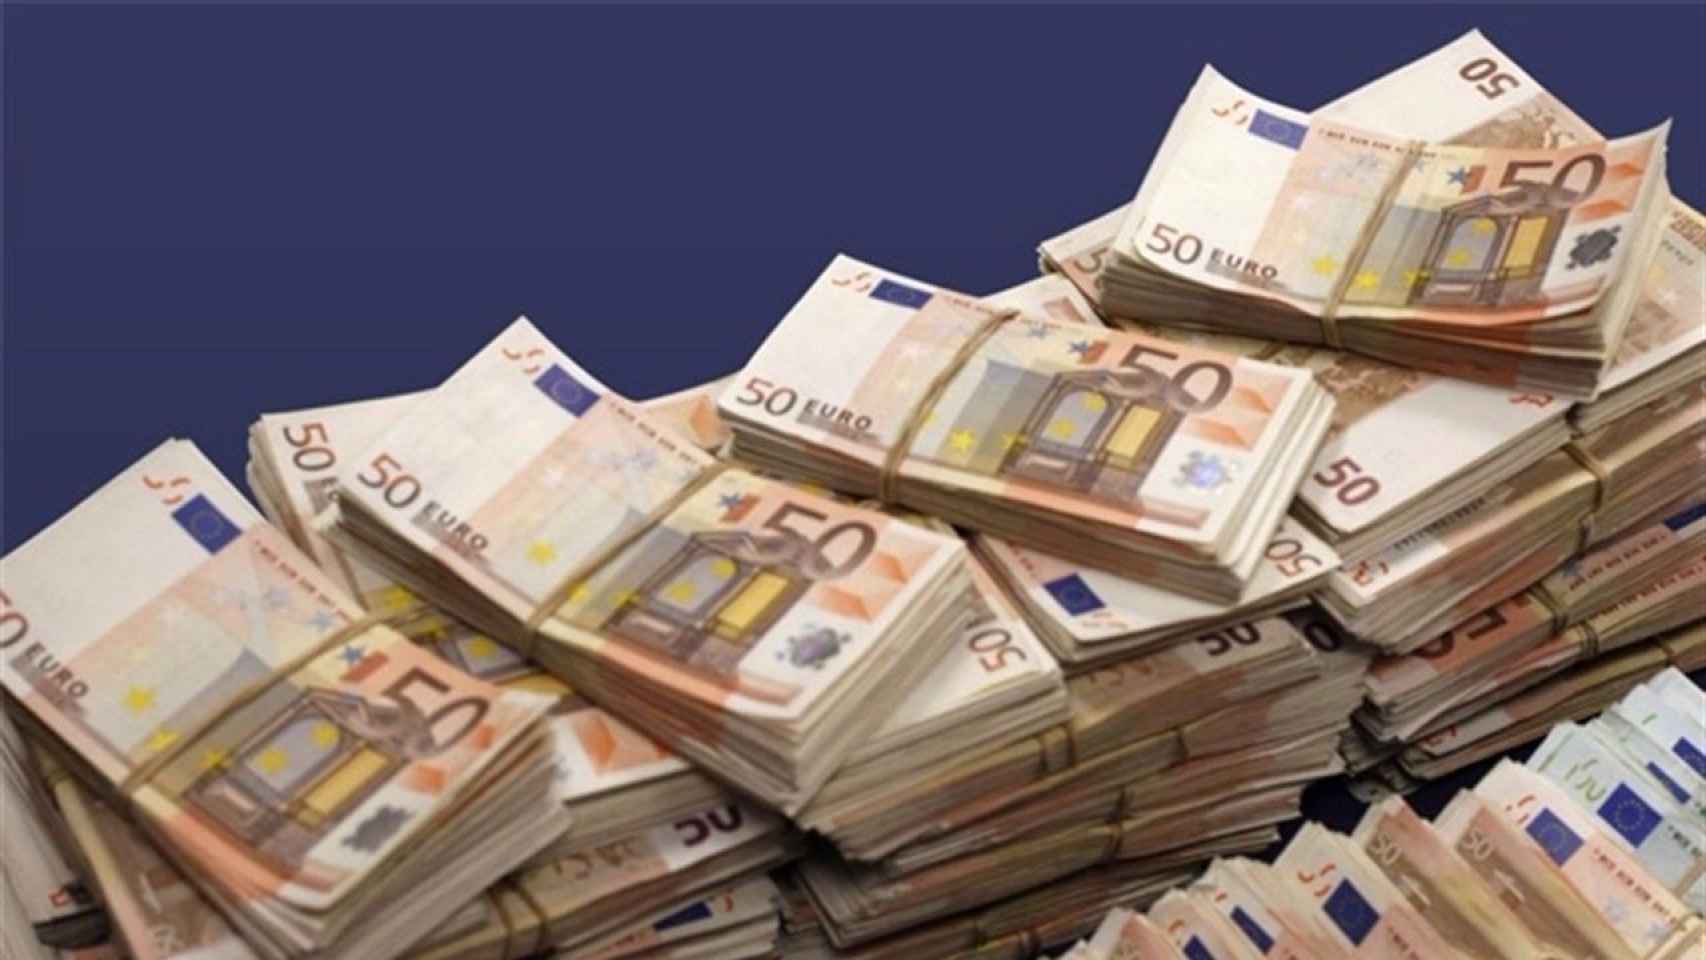 Imagen de billetes de 50 euros